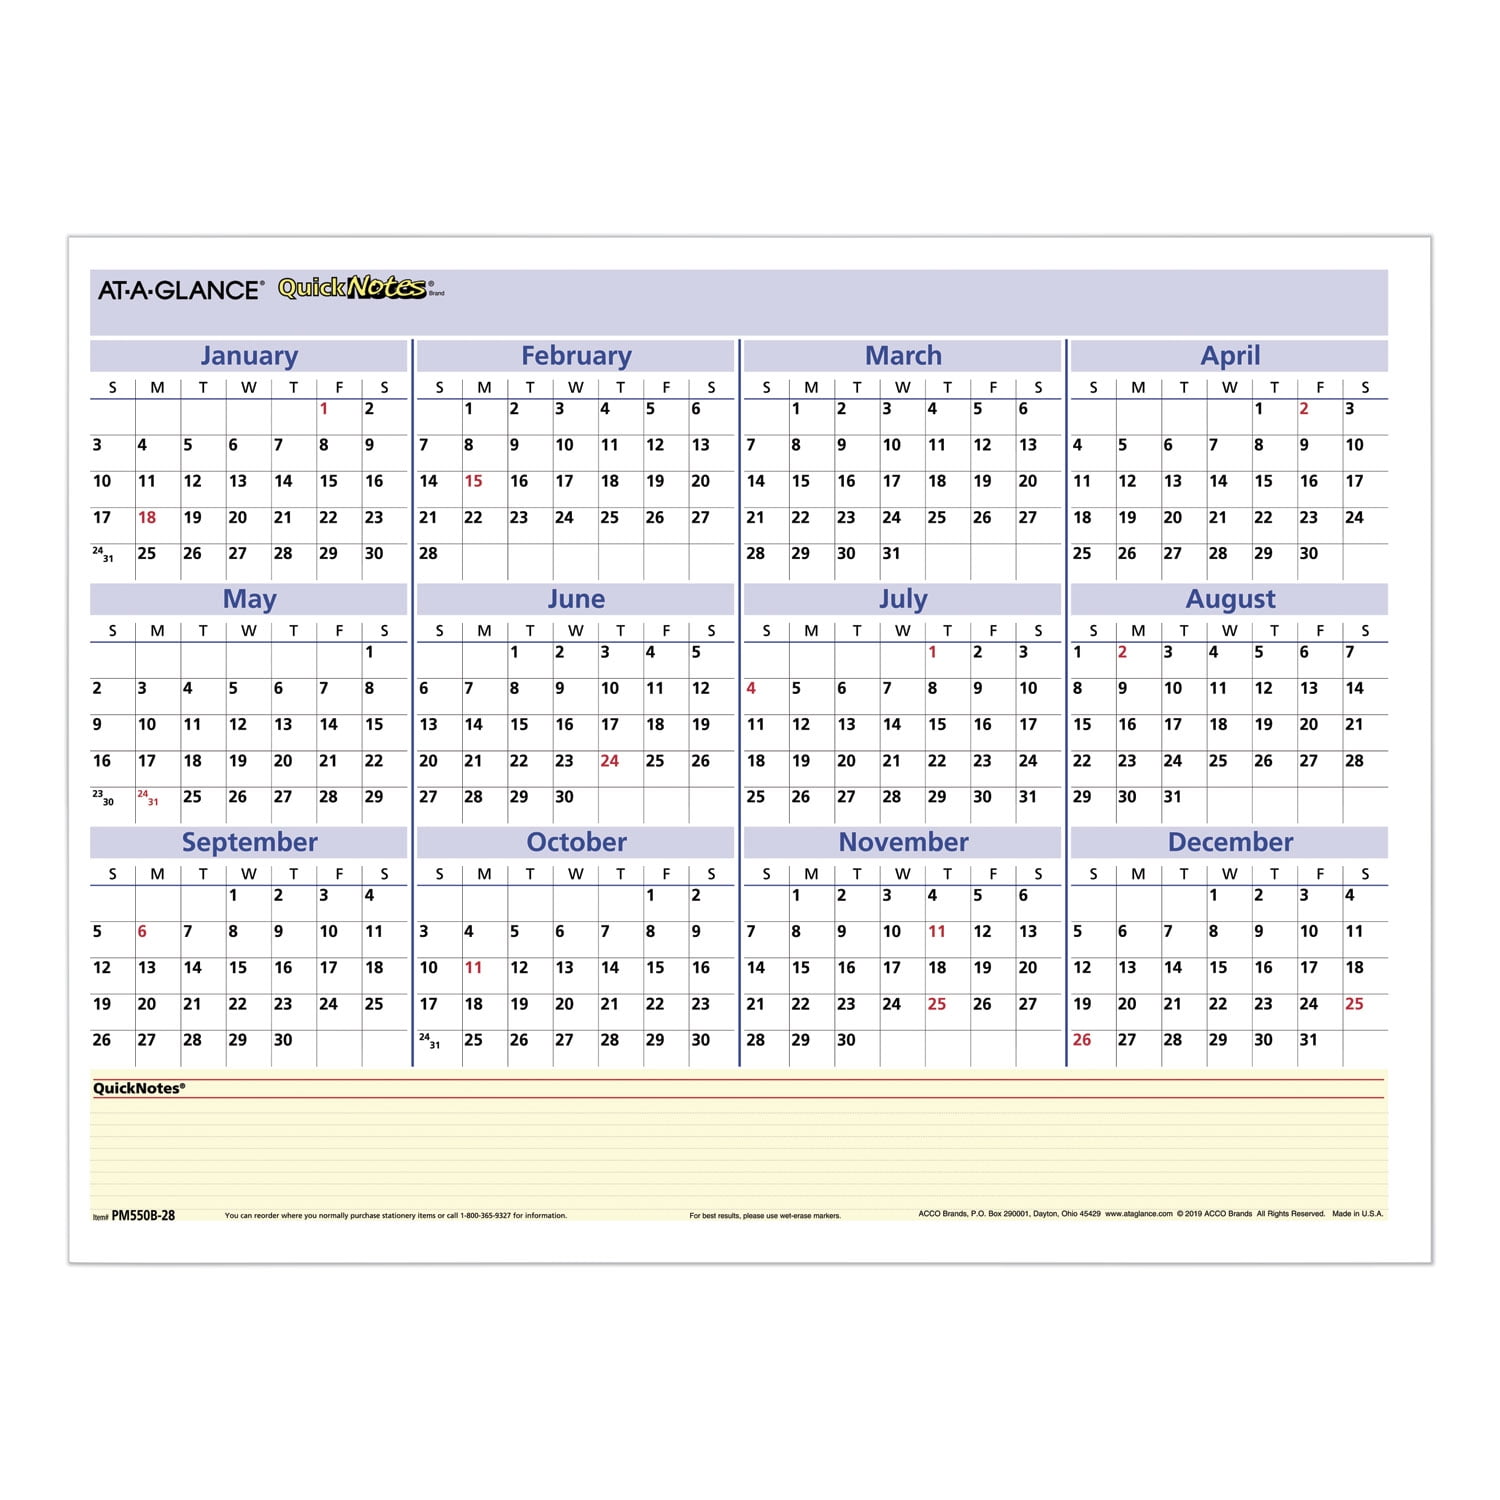 at-a-glance-quicknotes-compact-erasable-wall-calendar-yearly-wall-calendars-brickseek